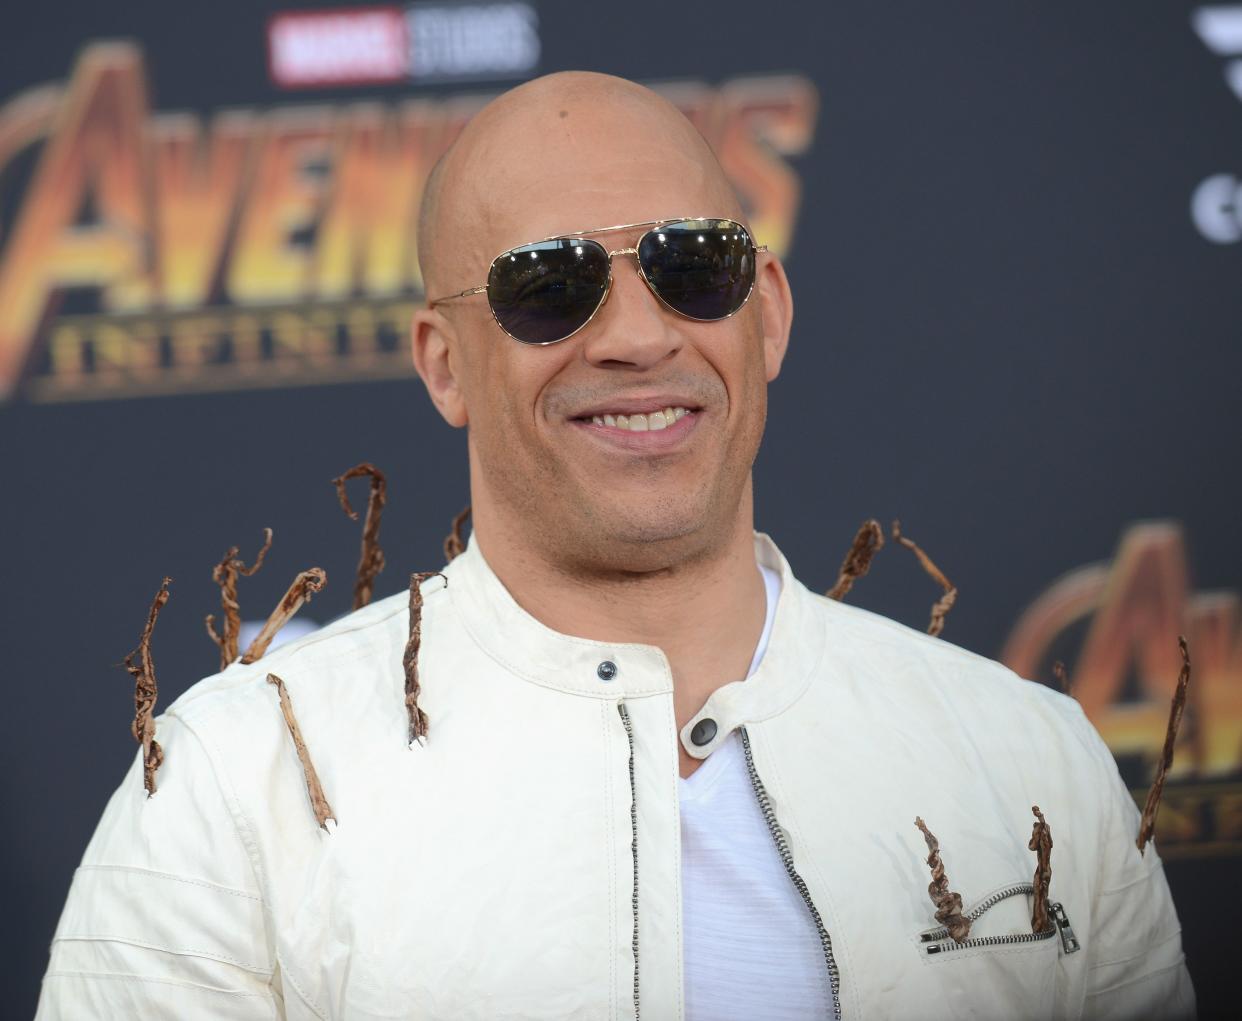 Vin Diesel arrives&nbsp;at the "Avengers: Infinity War" premiere. (Photo: Albert L. Ortega via Getty Images)